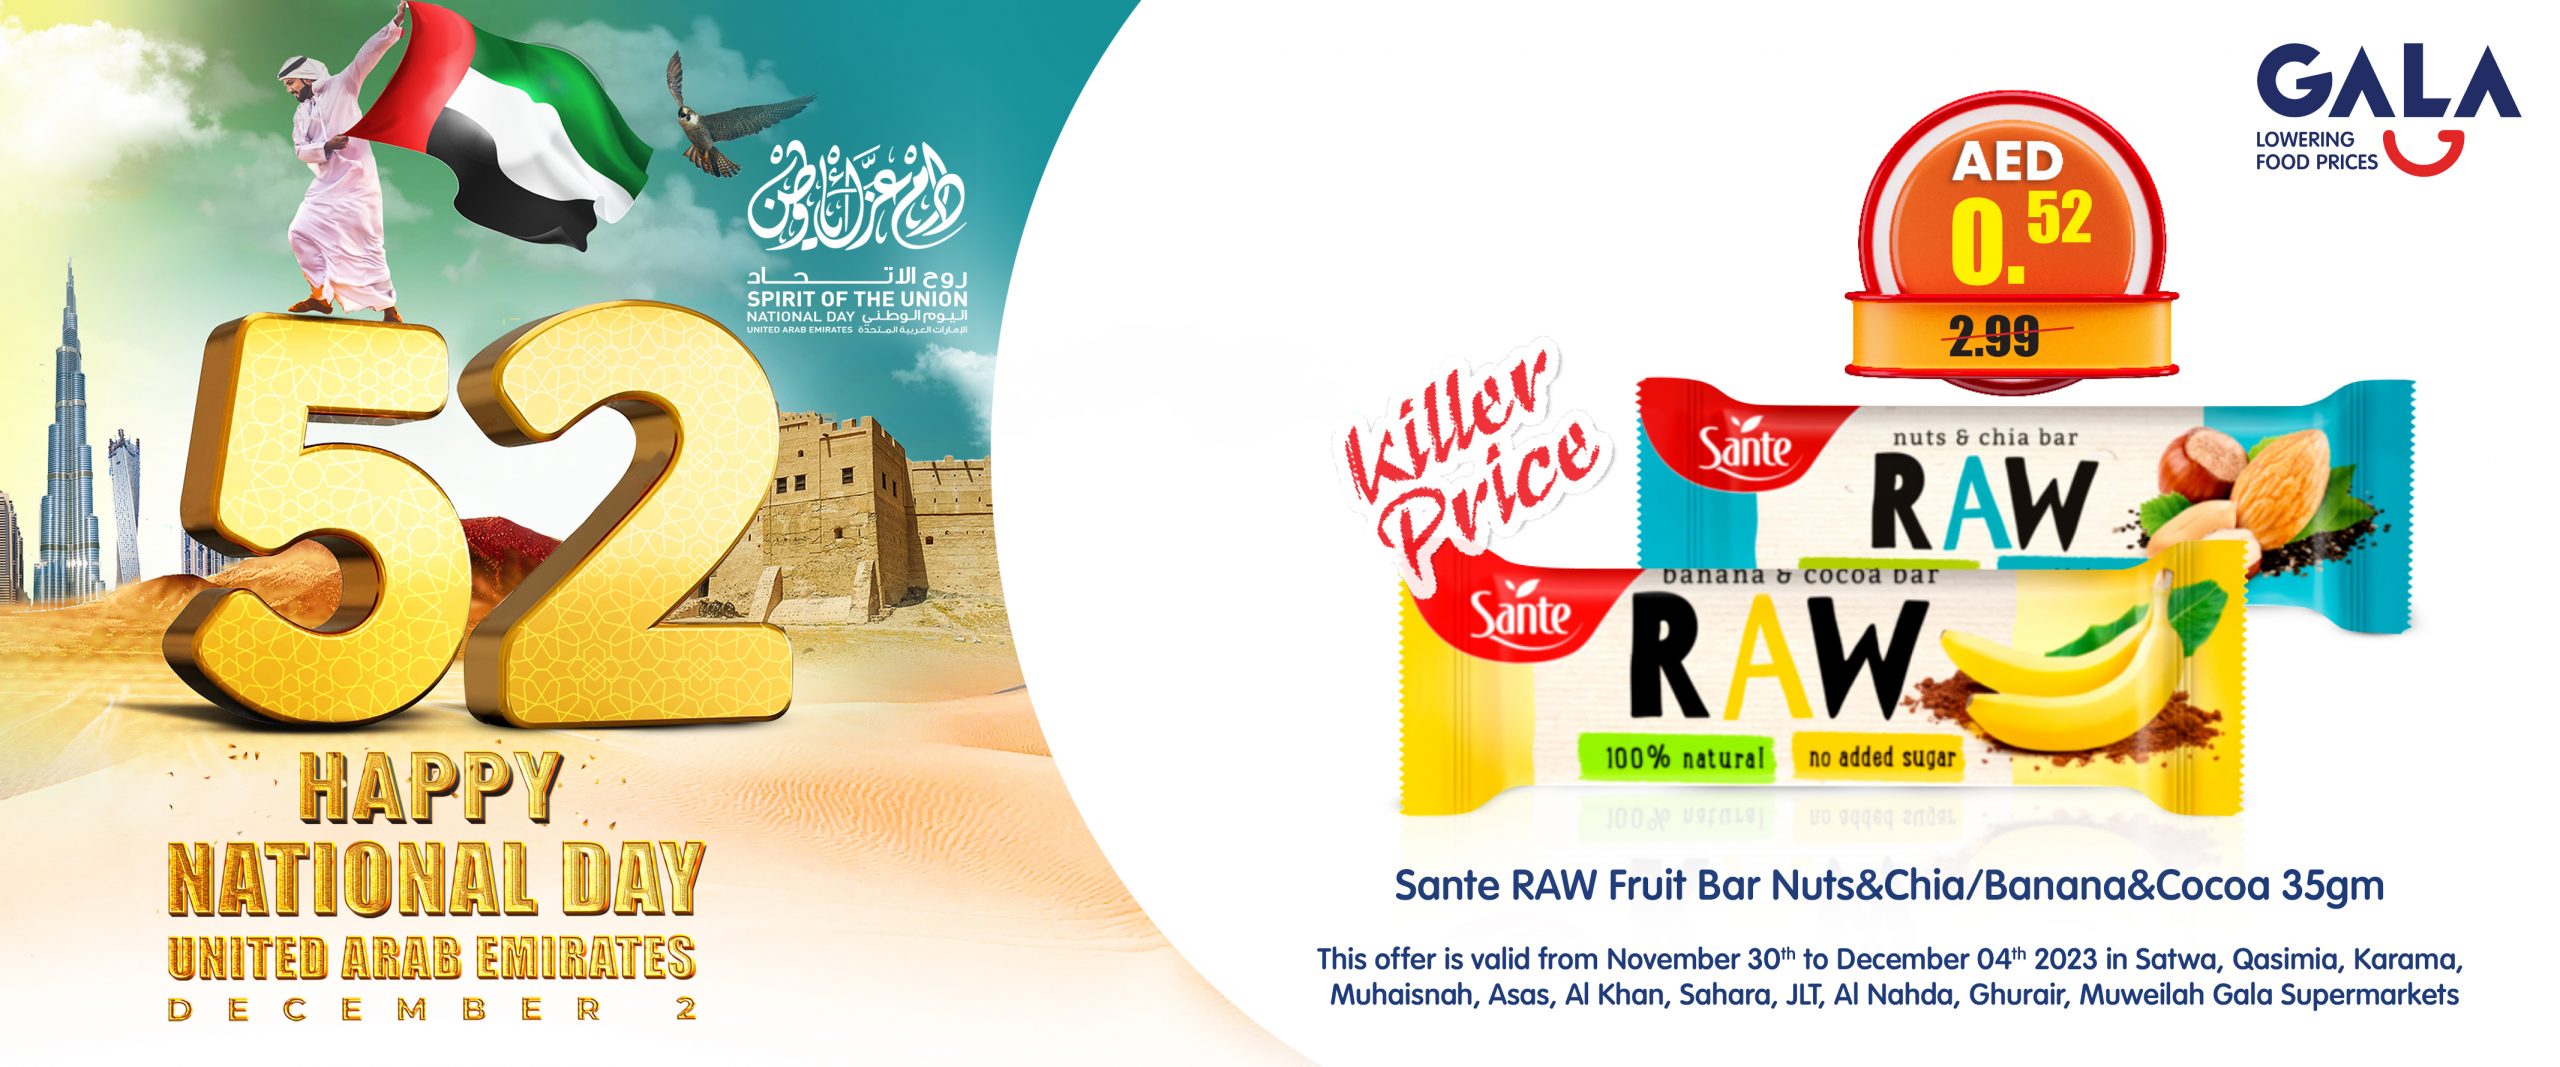 Sante RAW Fruit Bar Nuts&Chia - Banana&Cocoa 35gm